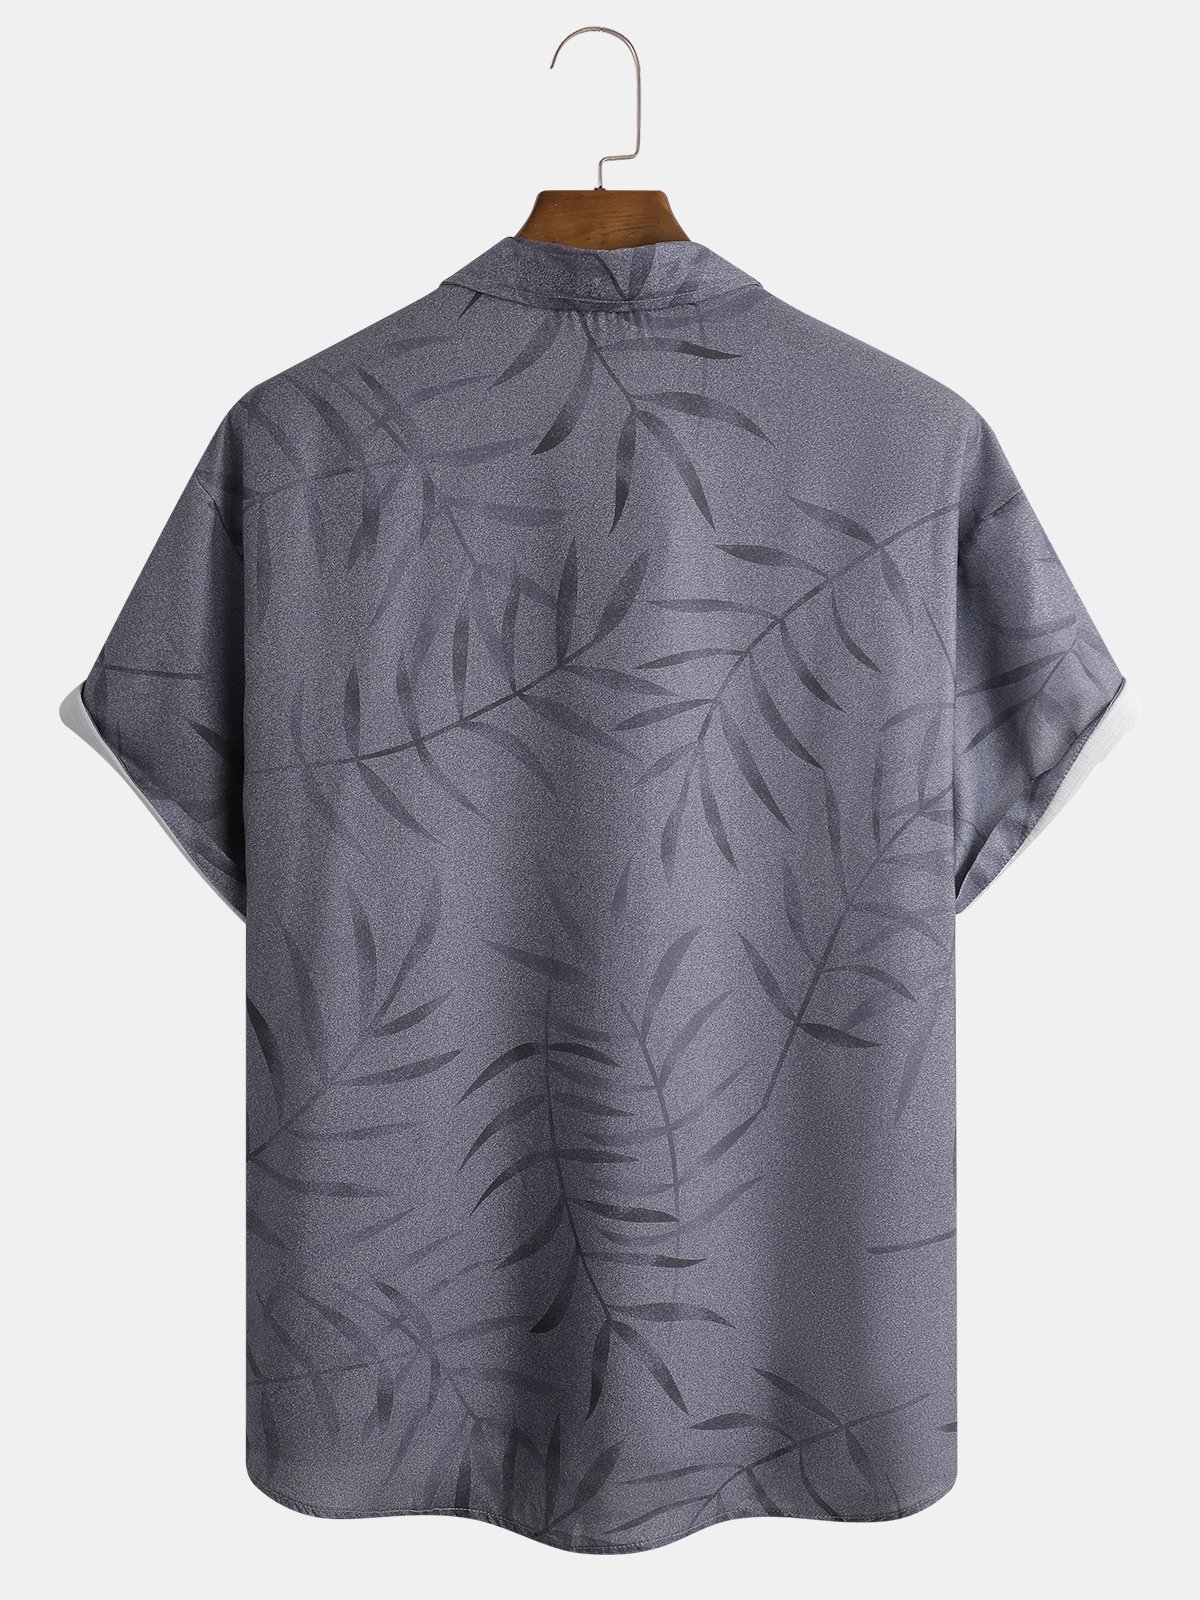 Hardaddy Leaf Short Sleeve Resort Shirt